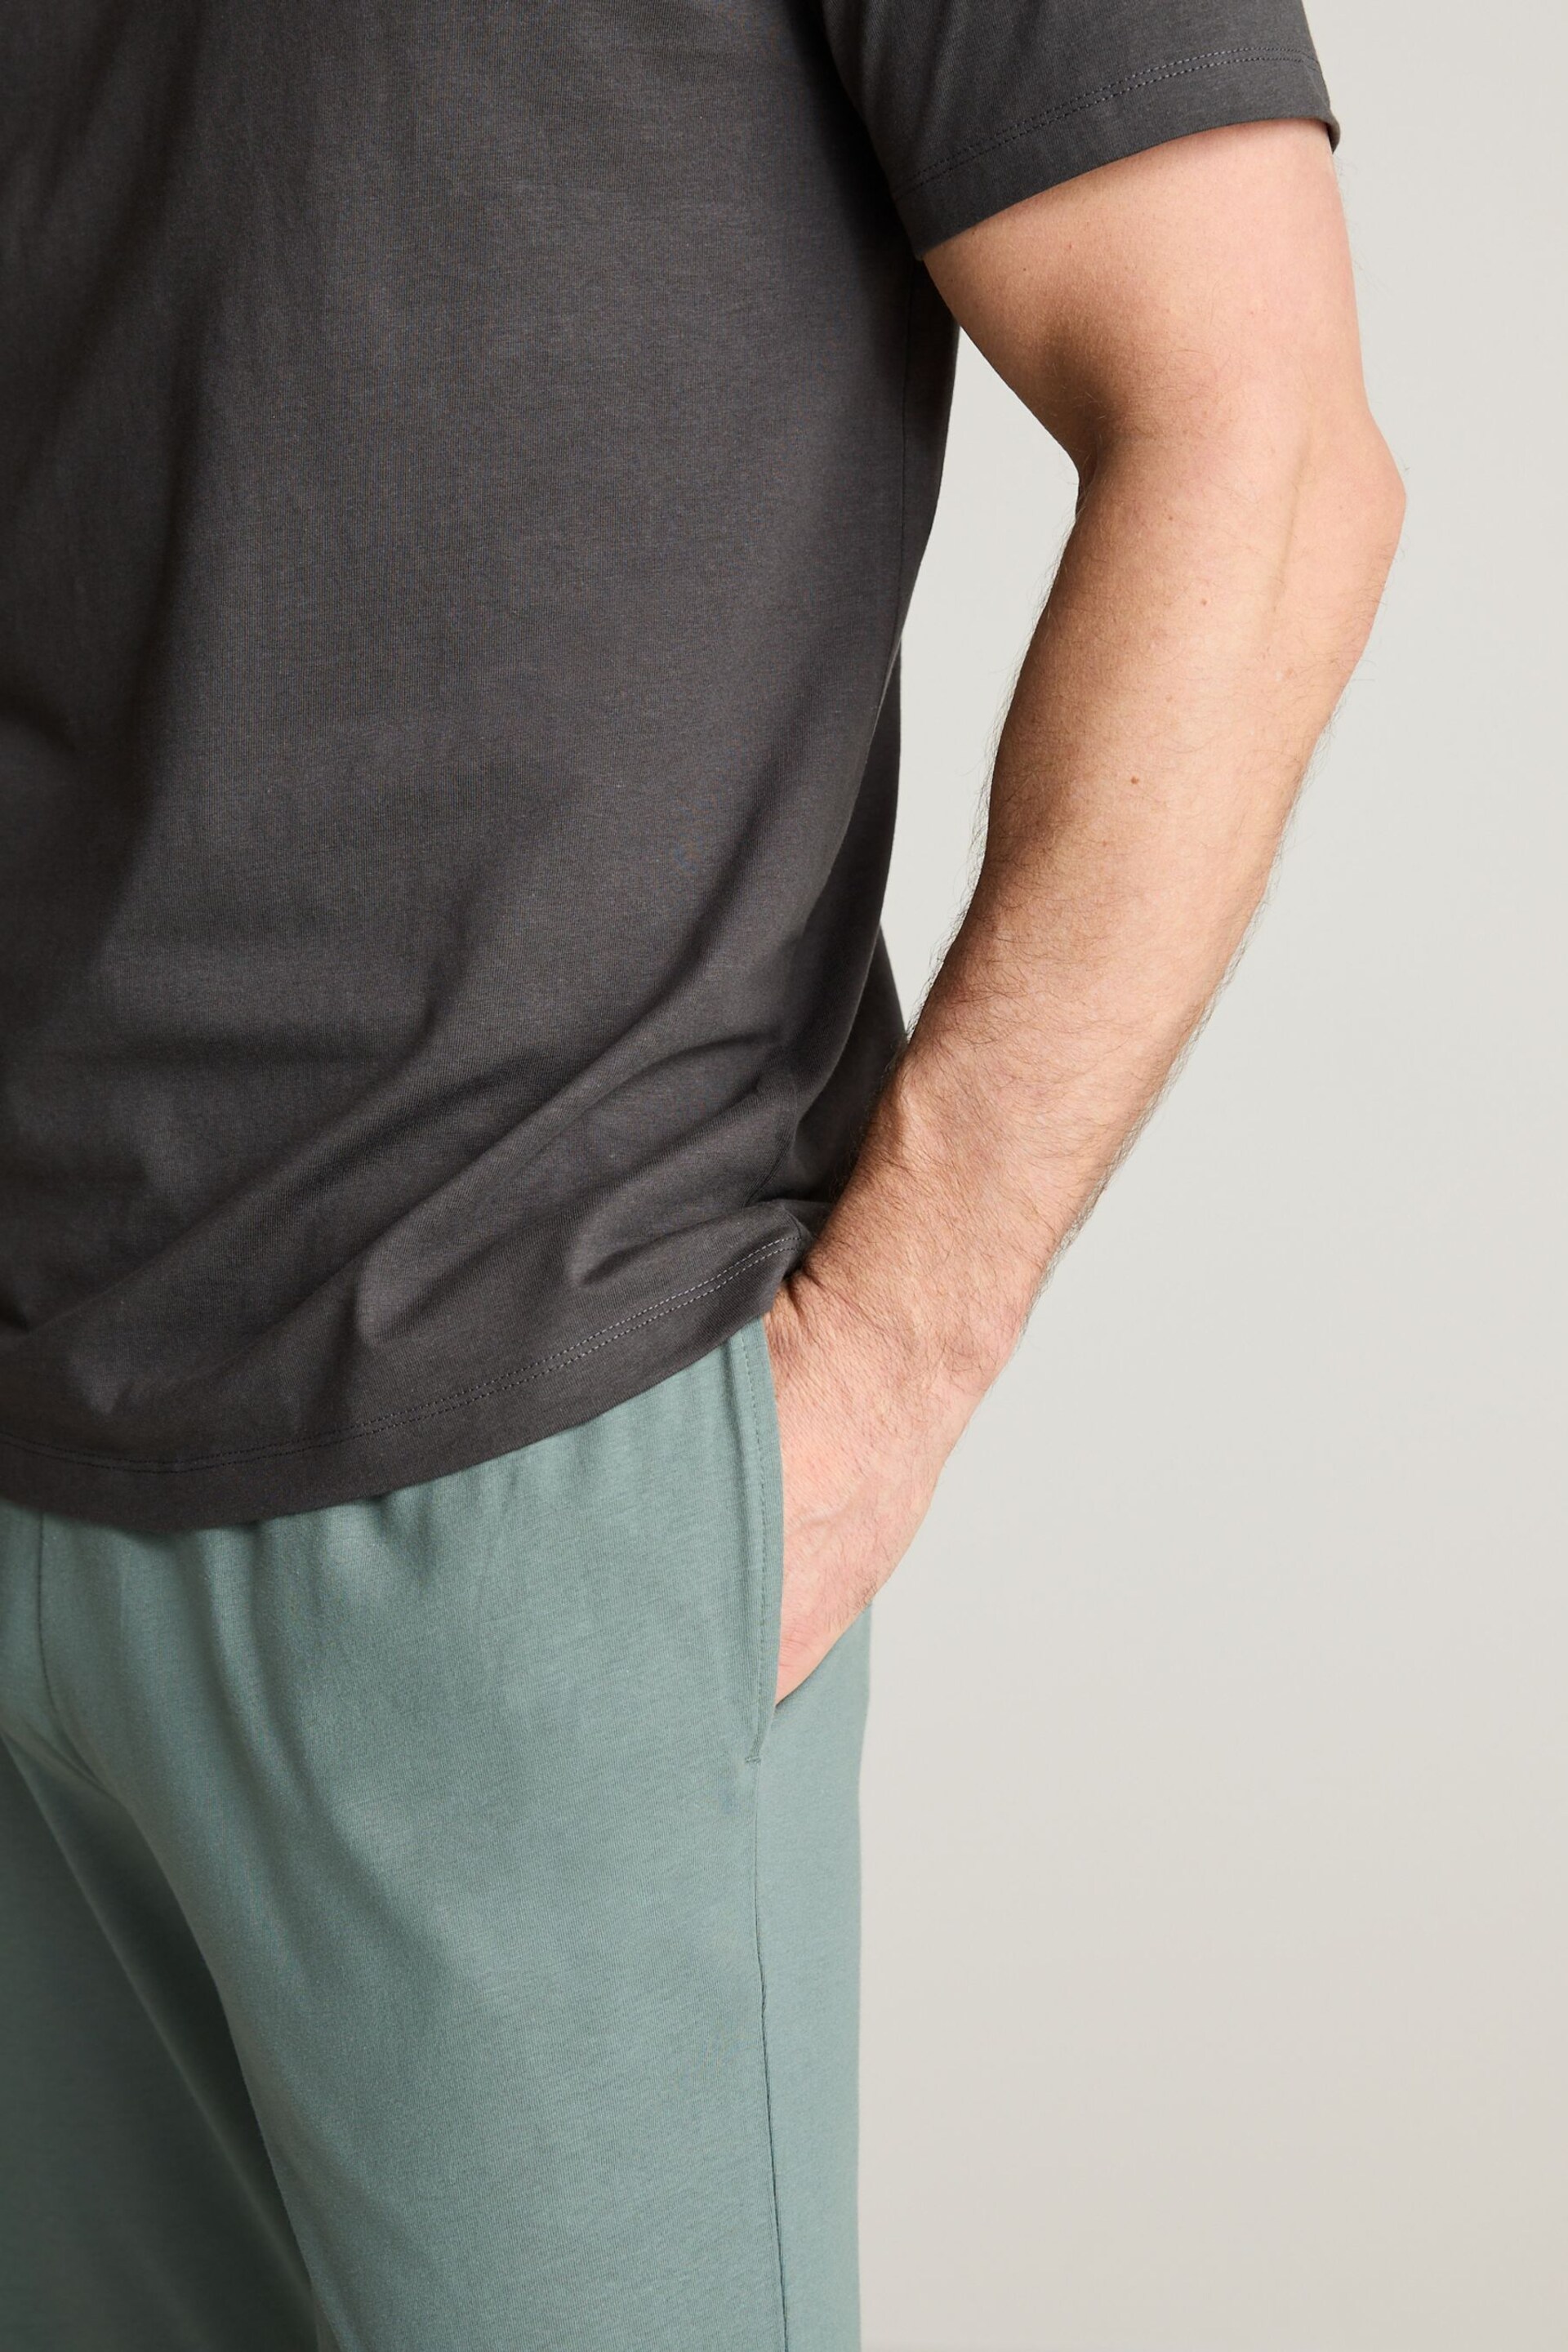 Grey/Sage Green Short Sleeve Jersey Pyjamas Set - Image 4 of 14